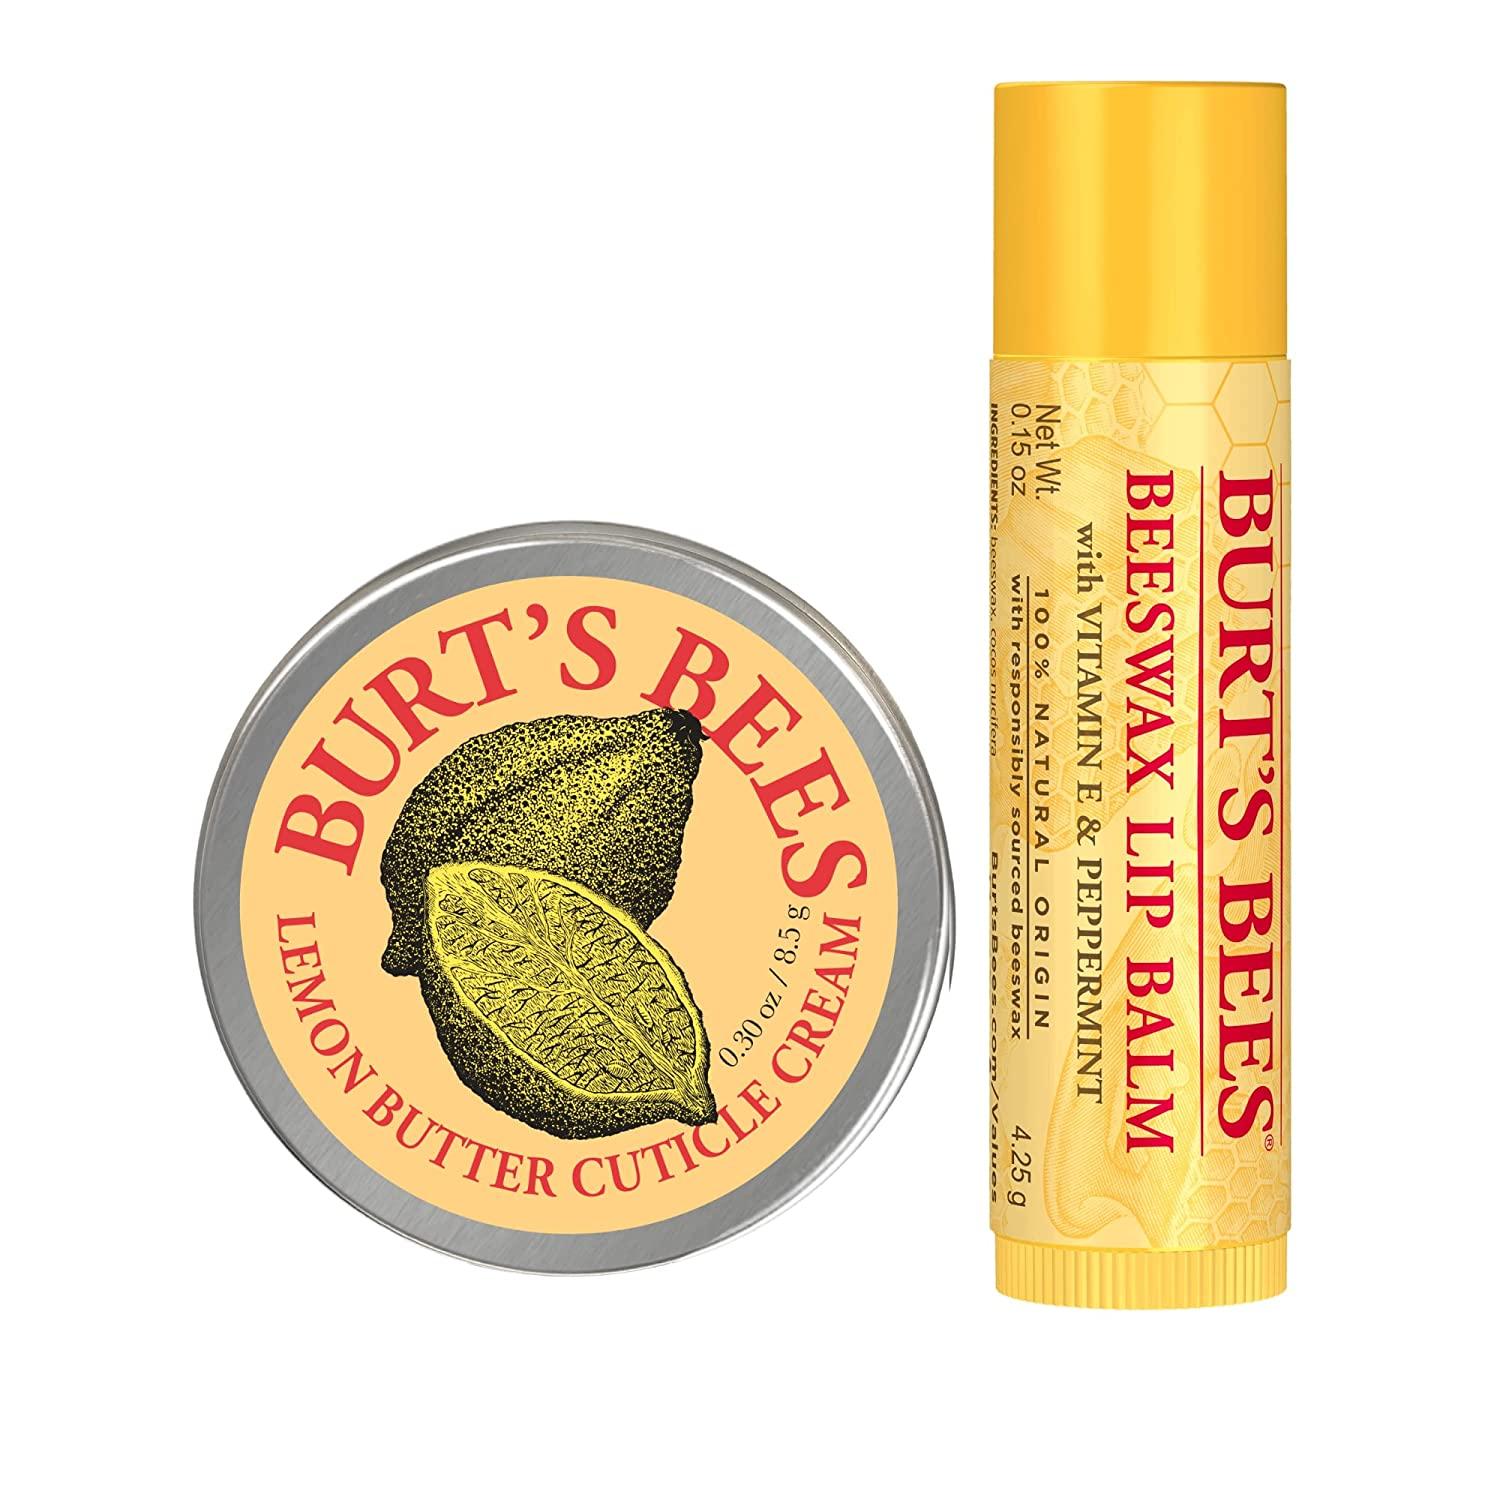 Burt's Bees 100% Natural Origin Moisturizing Lip Balm Original Beeswax,  Beeswax